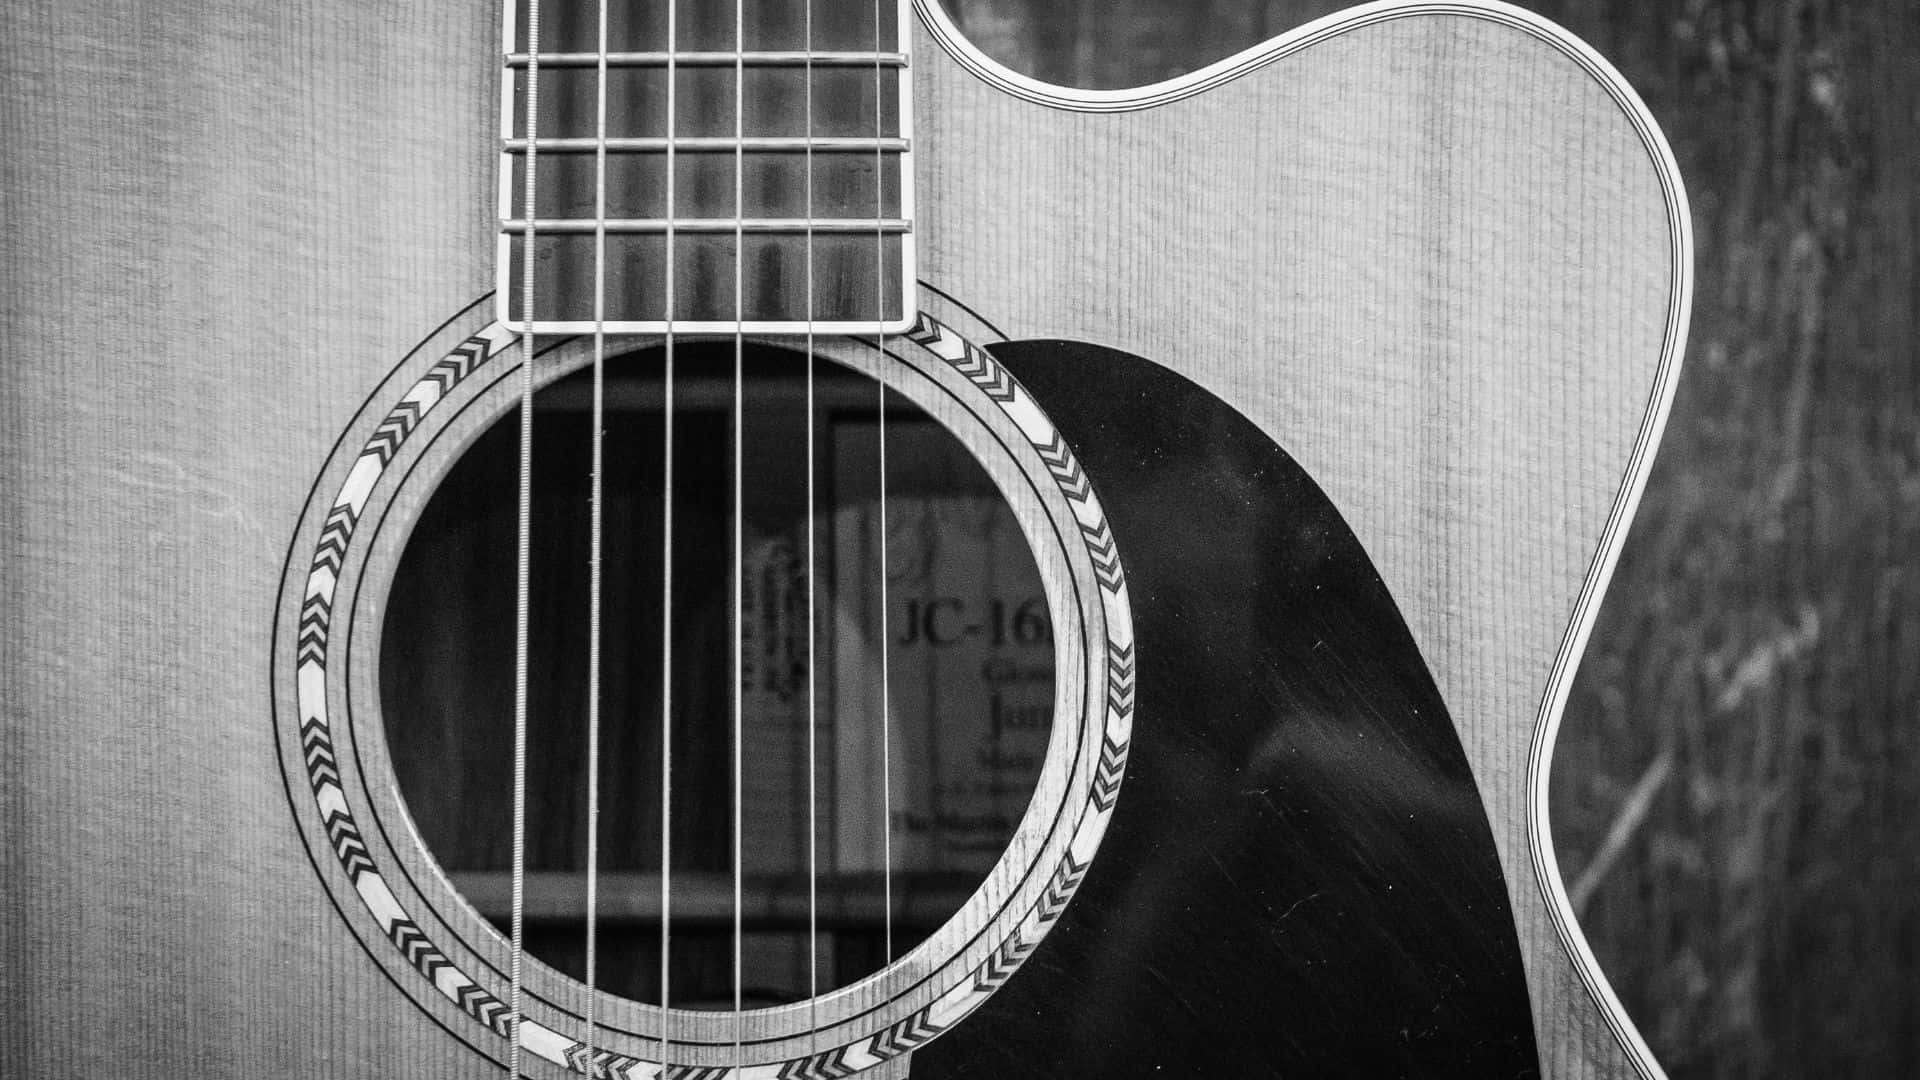 Striking Monochrome Guitar Image Wallpaper